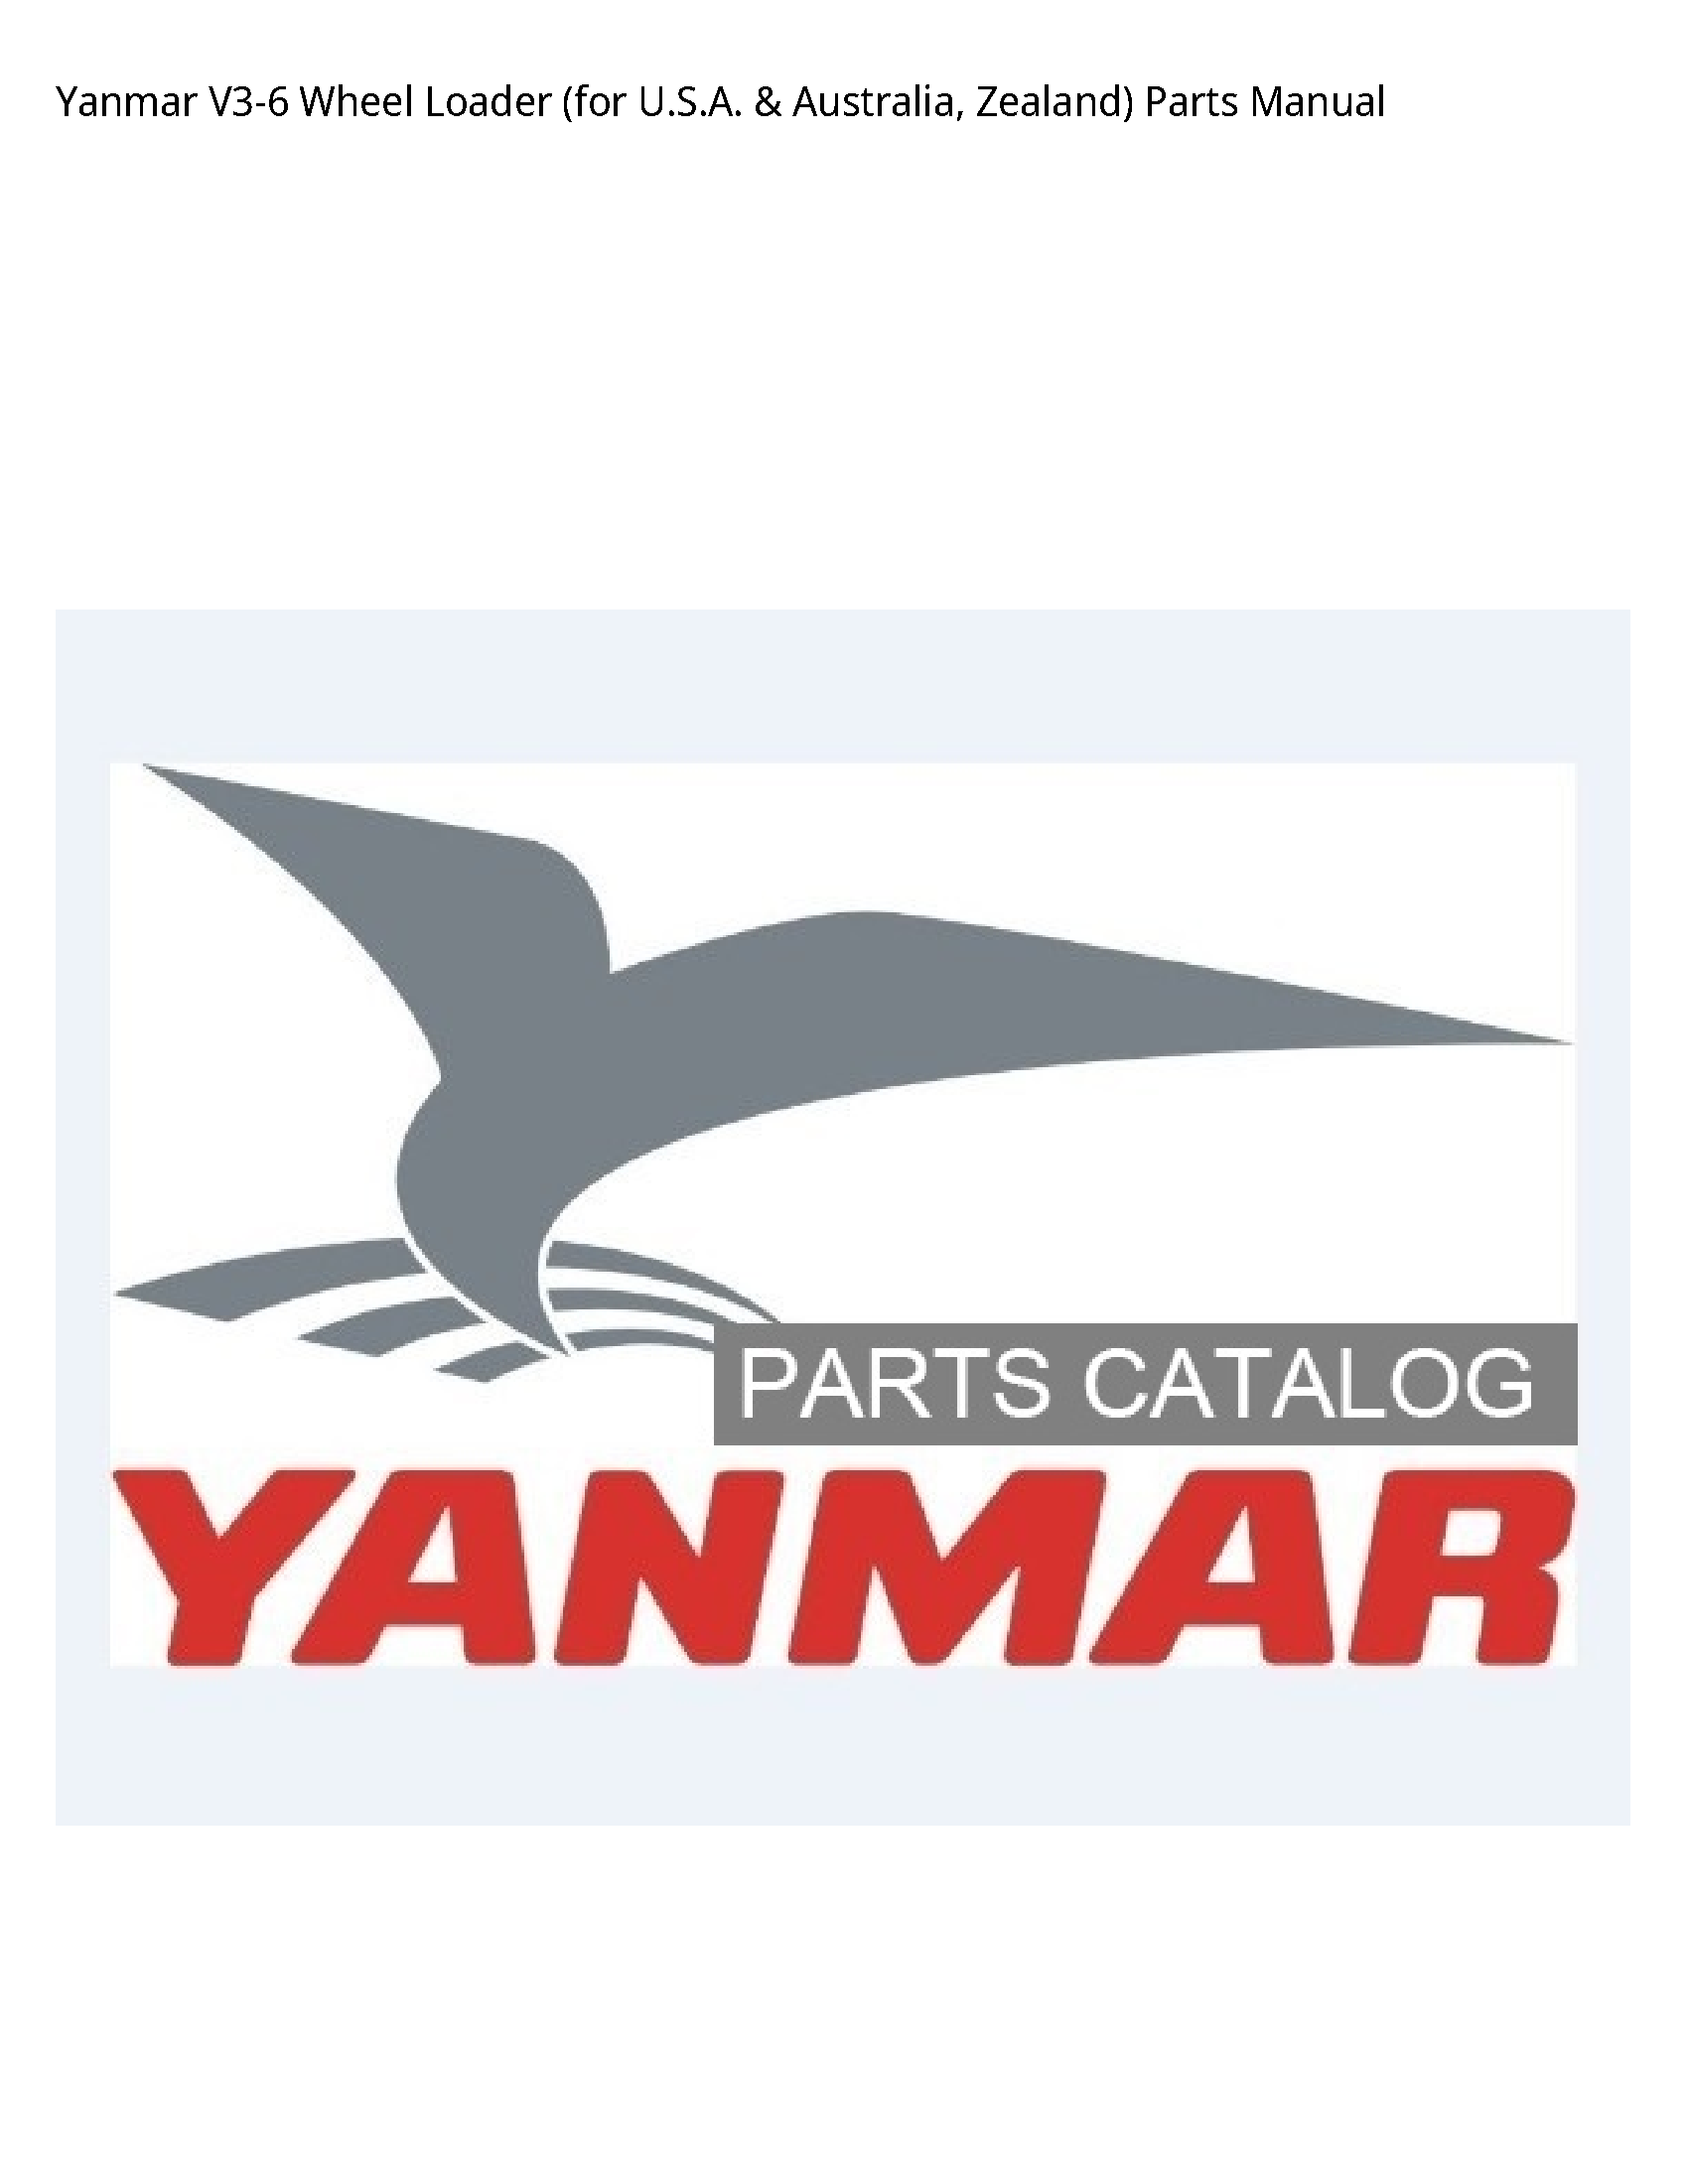 Yanmar V3-6 Wheel Loader (for U.S.A. Australia manual